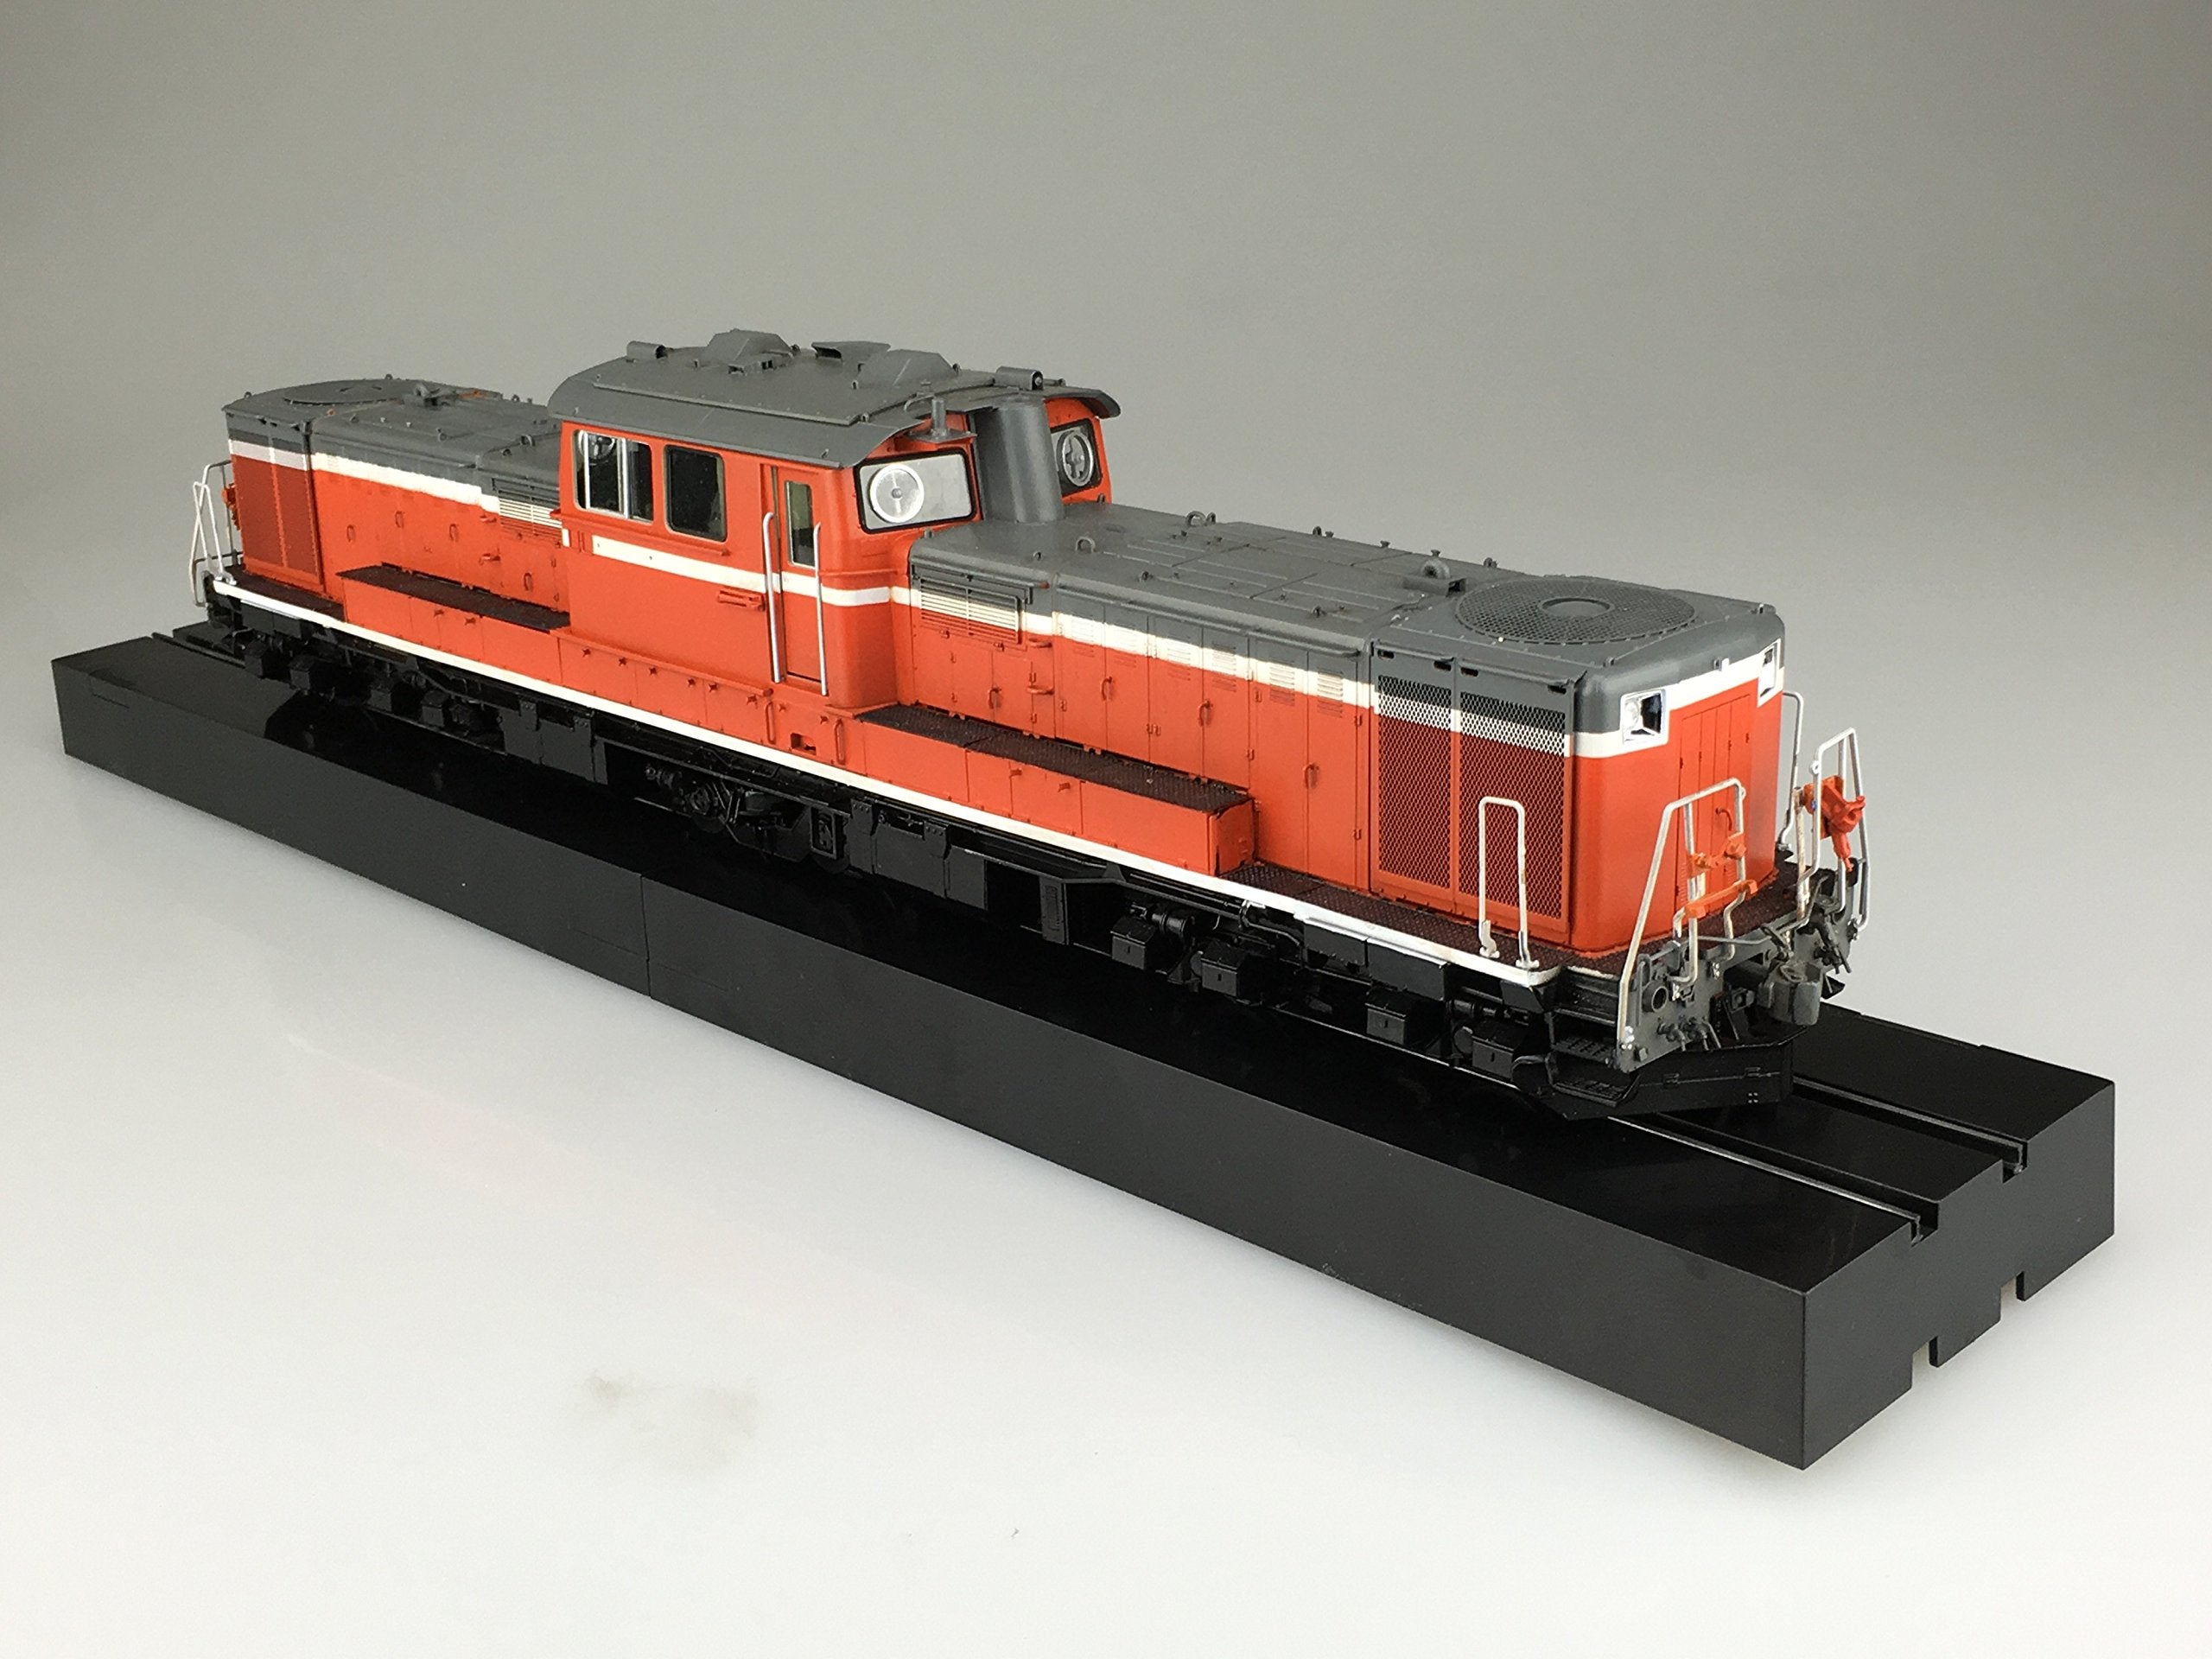 1/45 Diesel Locomotive DD51 Standard Specification